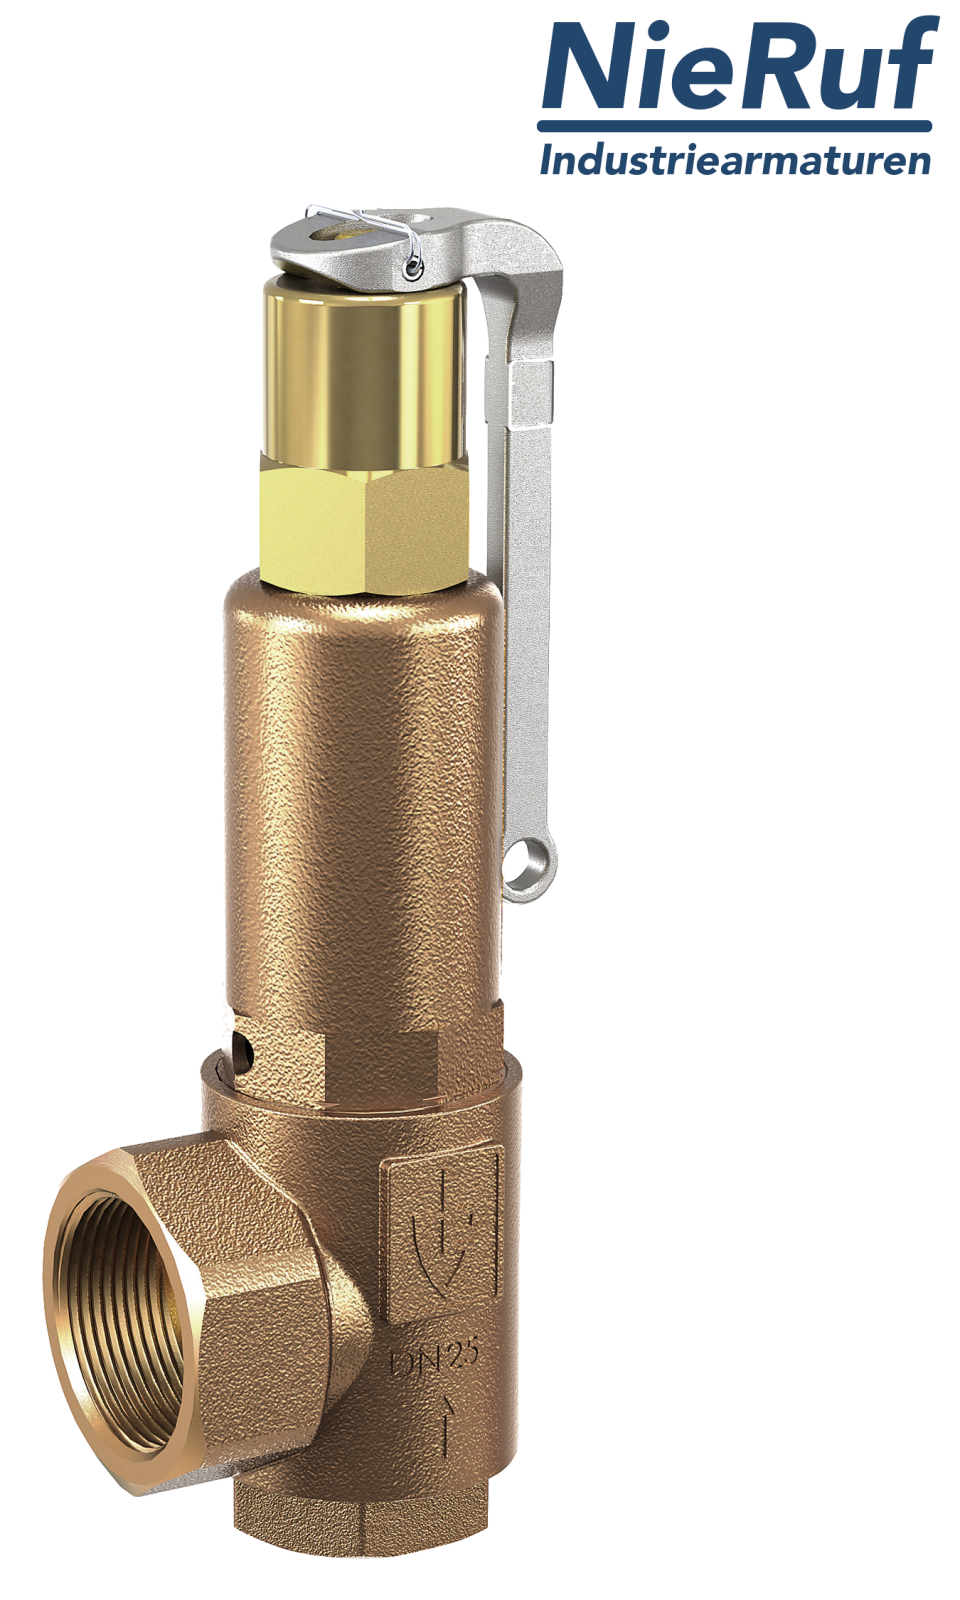 safety valve 2" x 2" fm SV07 neutral gaseous media, gunmetal NBR, with lever